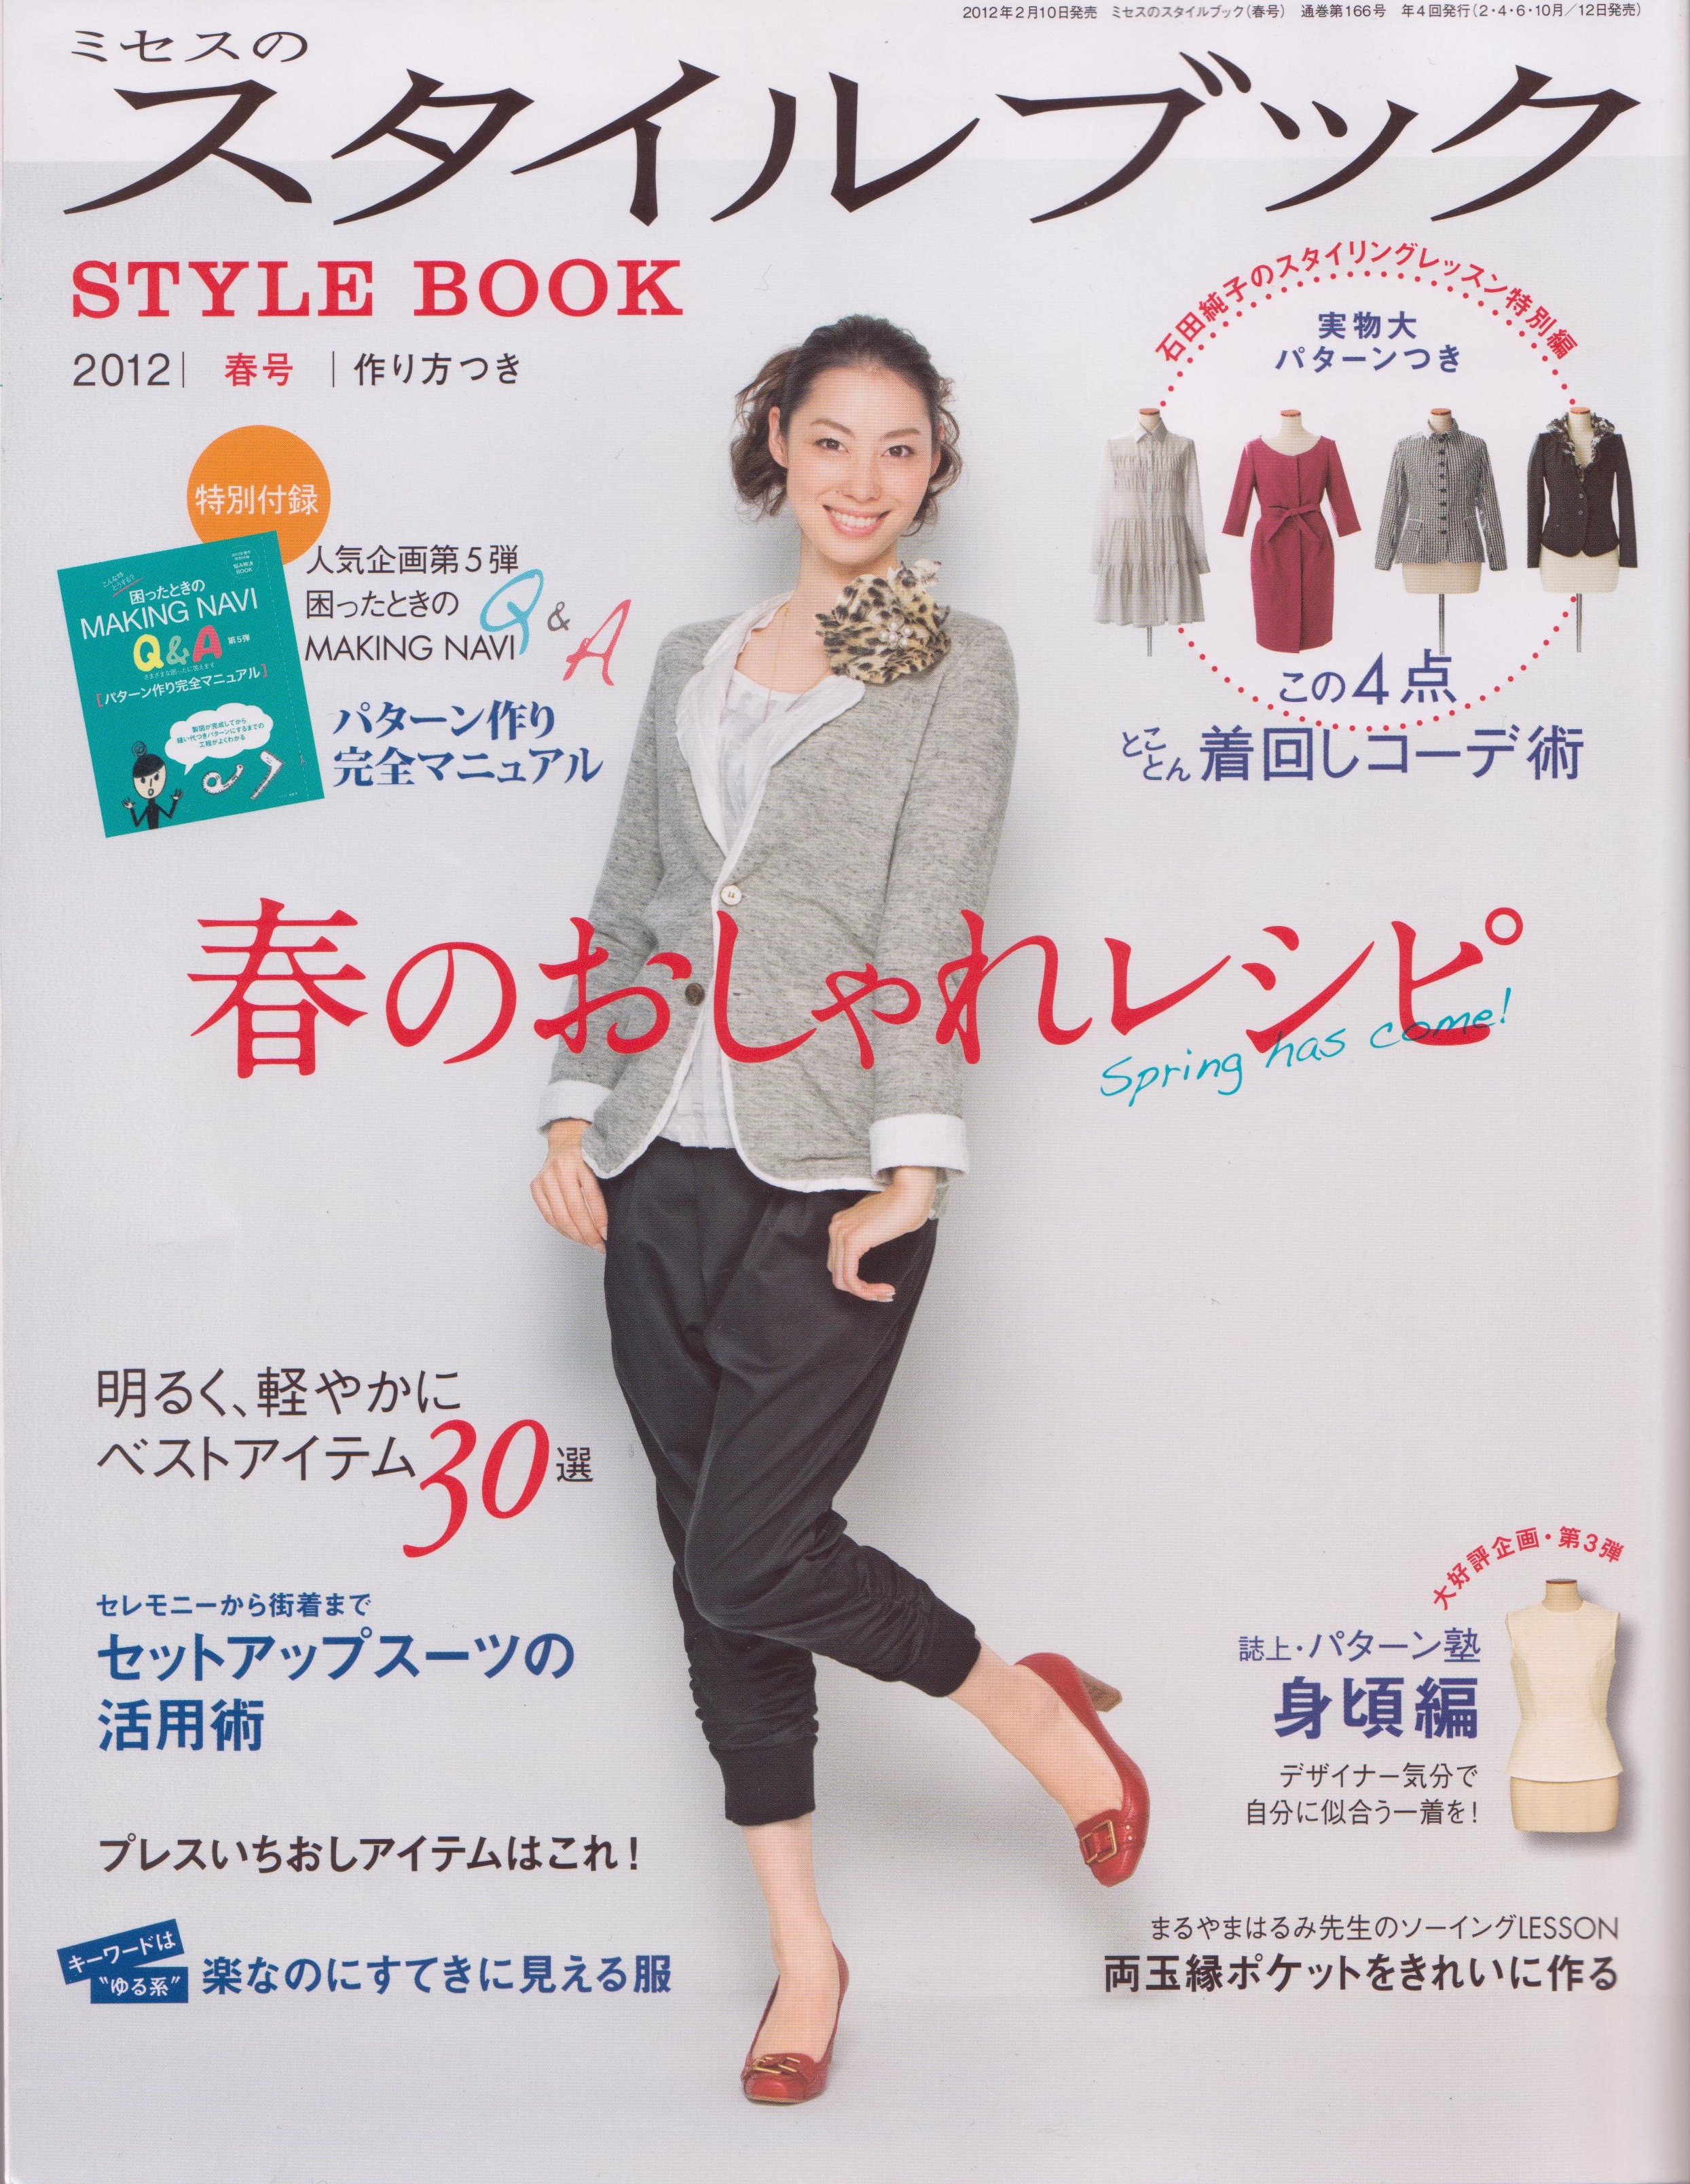 Style book. Stylebook. Mrs Stylebook Winter 2012. AP Stylebook 56.